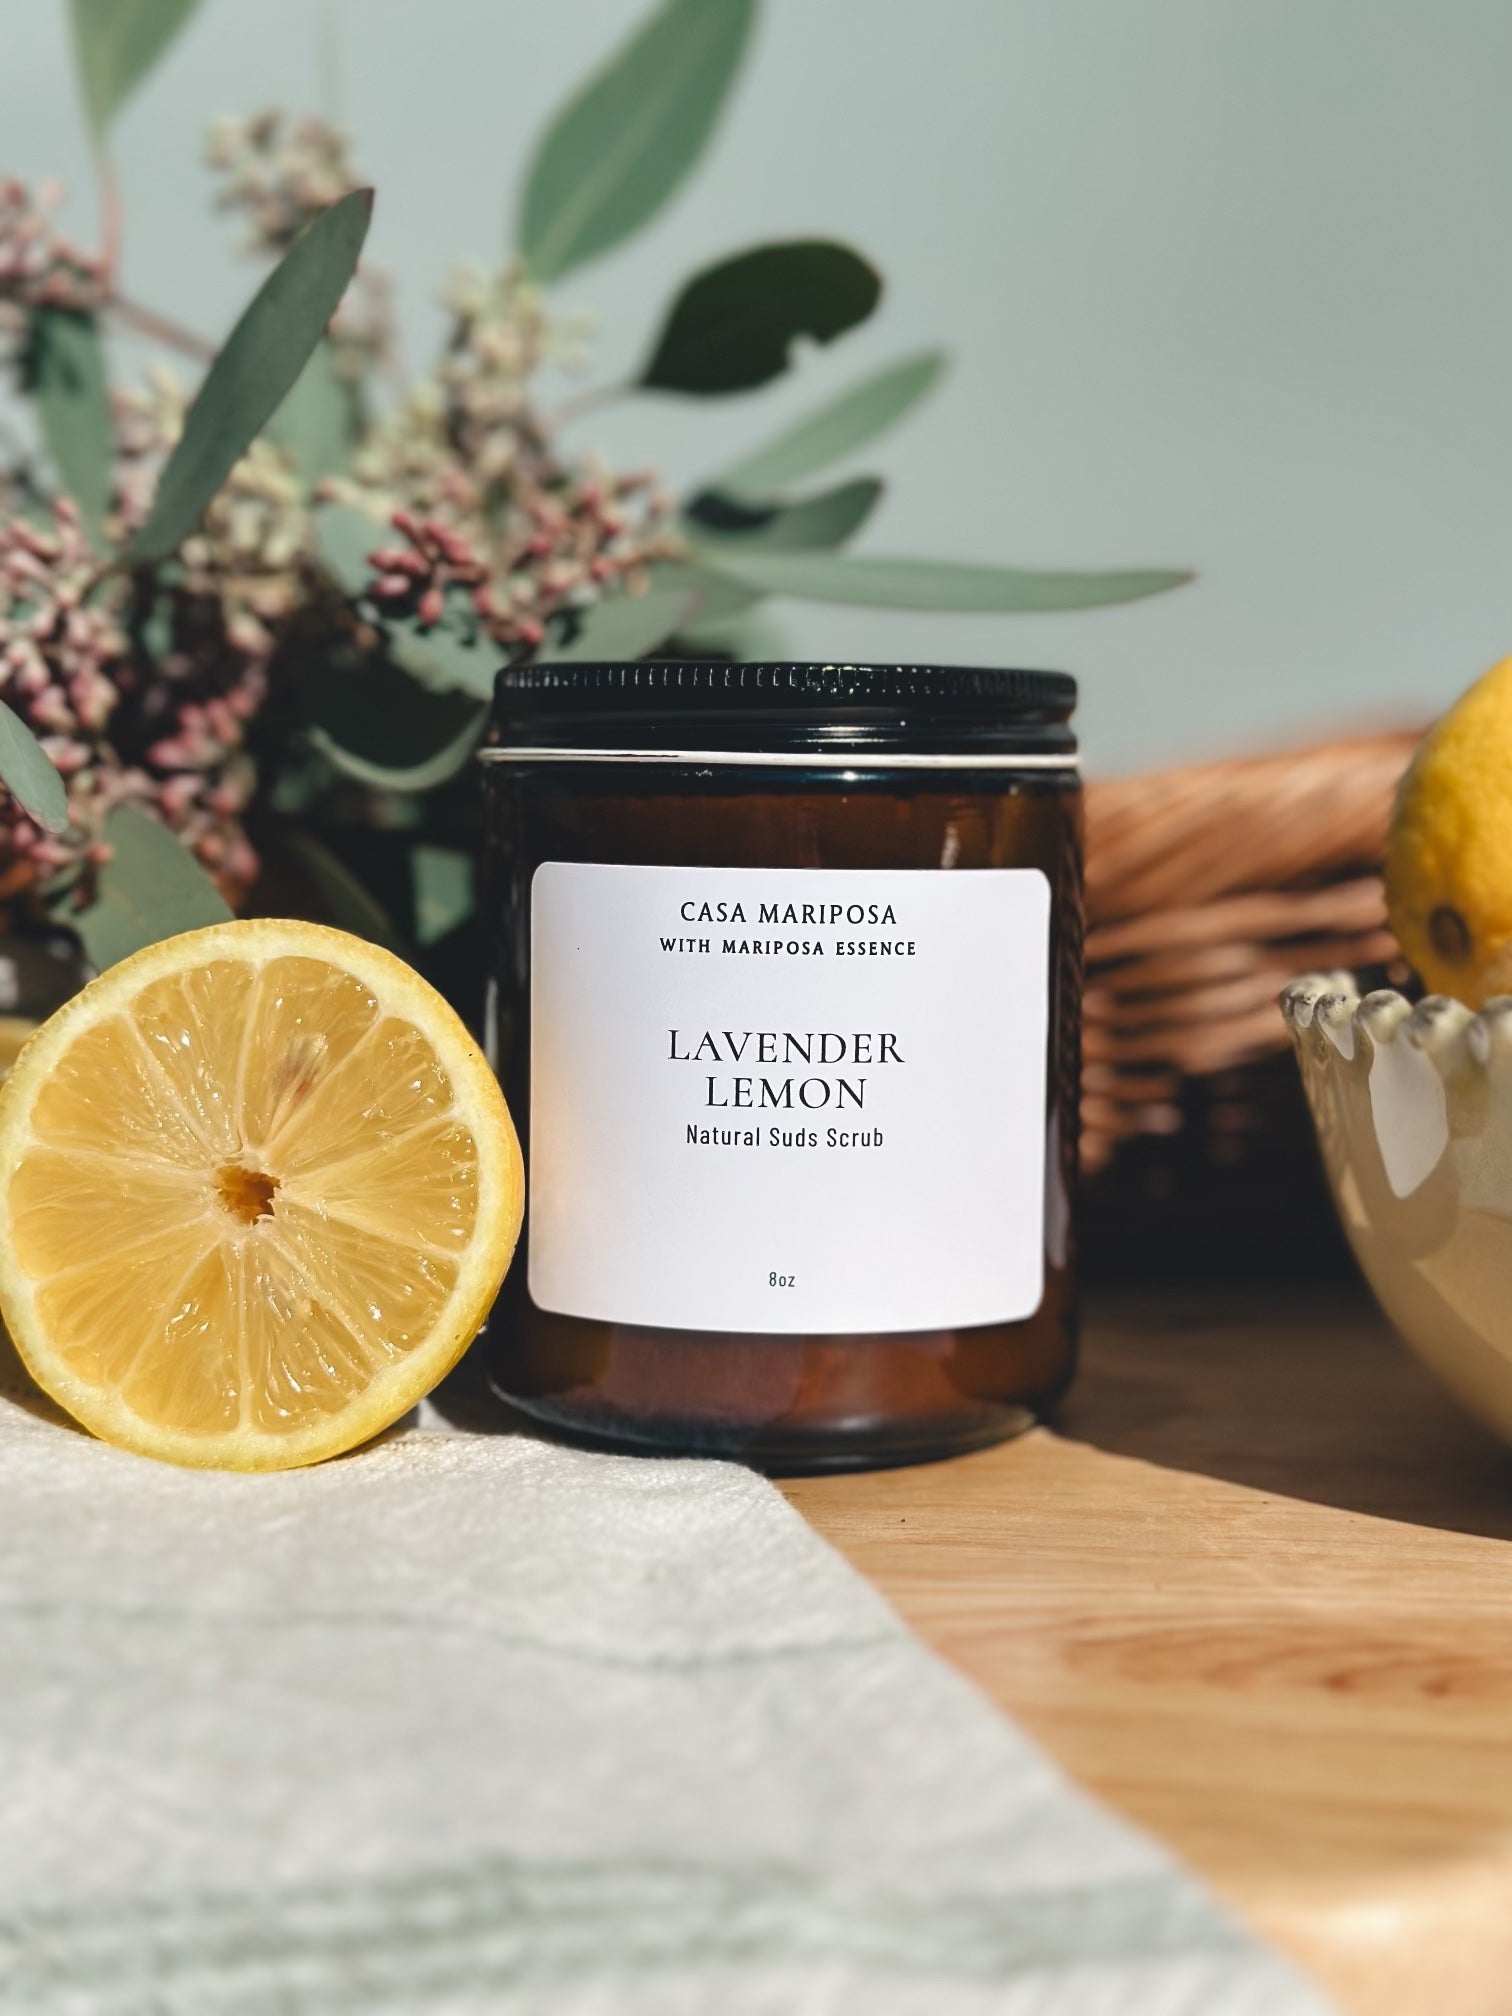 Lavender Lemon Suds Scrub displayed with lemons